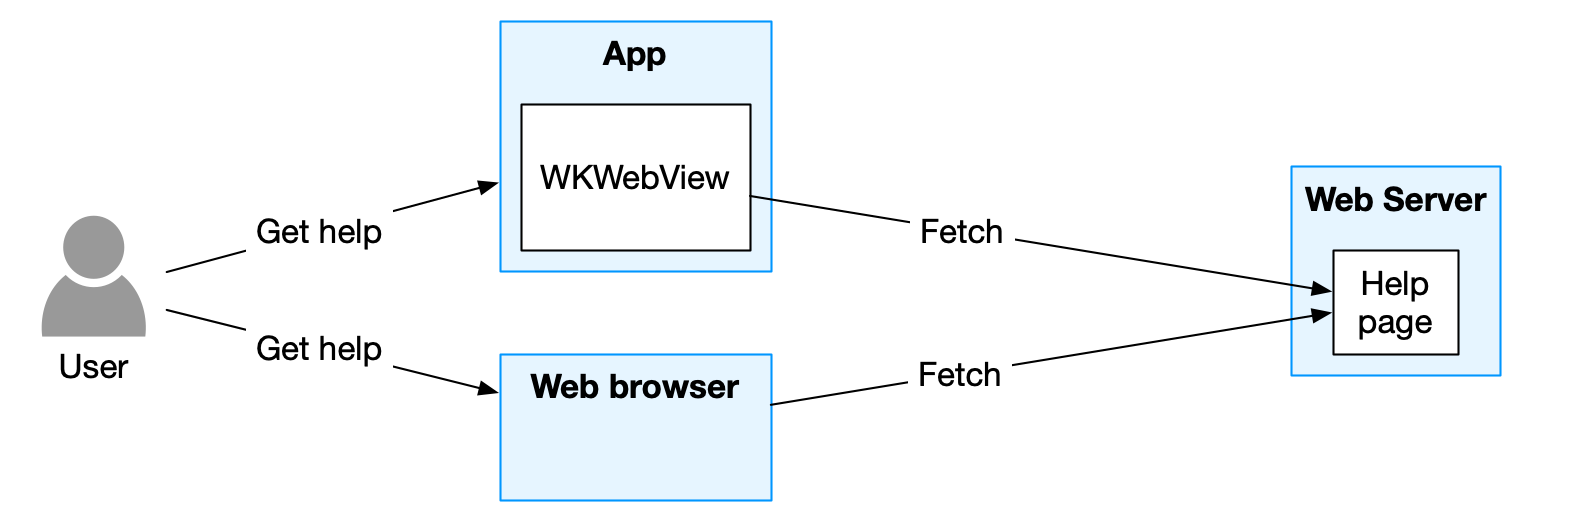 Fetch app help from Web Server